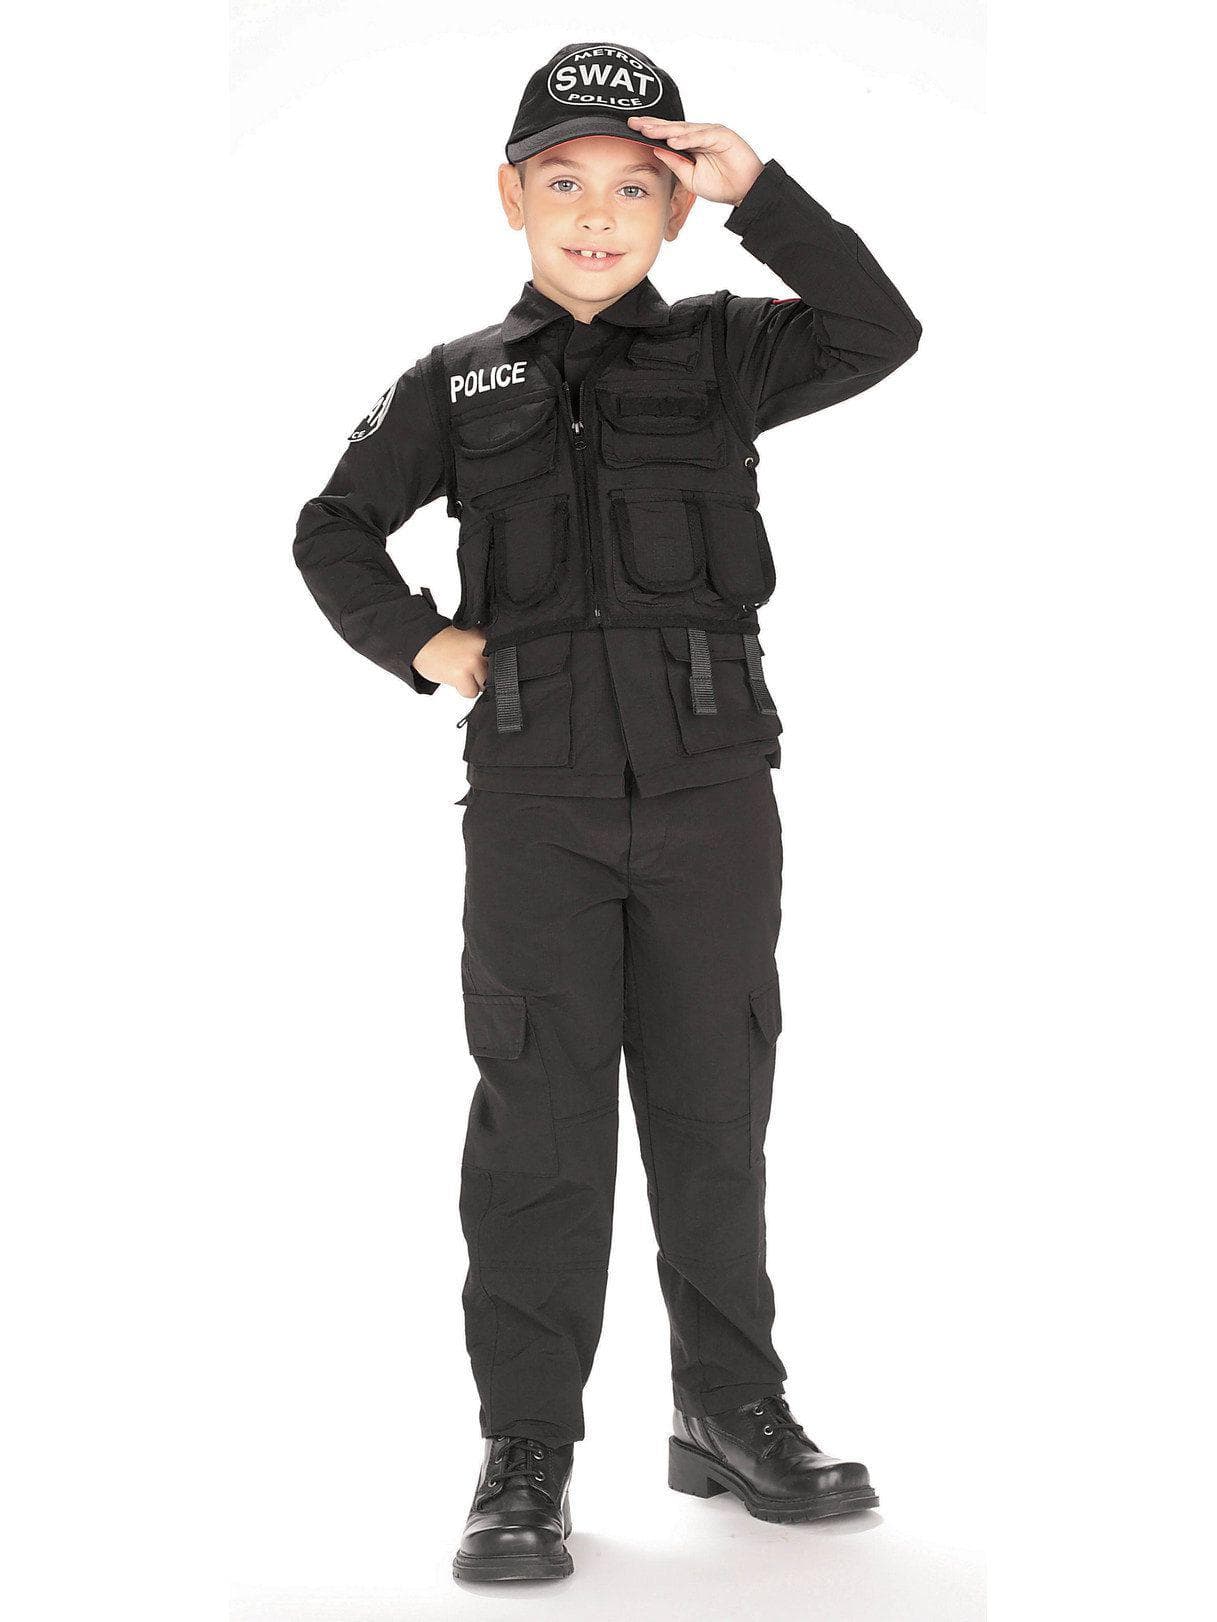 Kids S.W.A.T. Police Costume - costumes.com